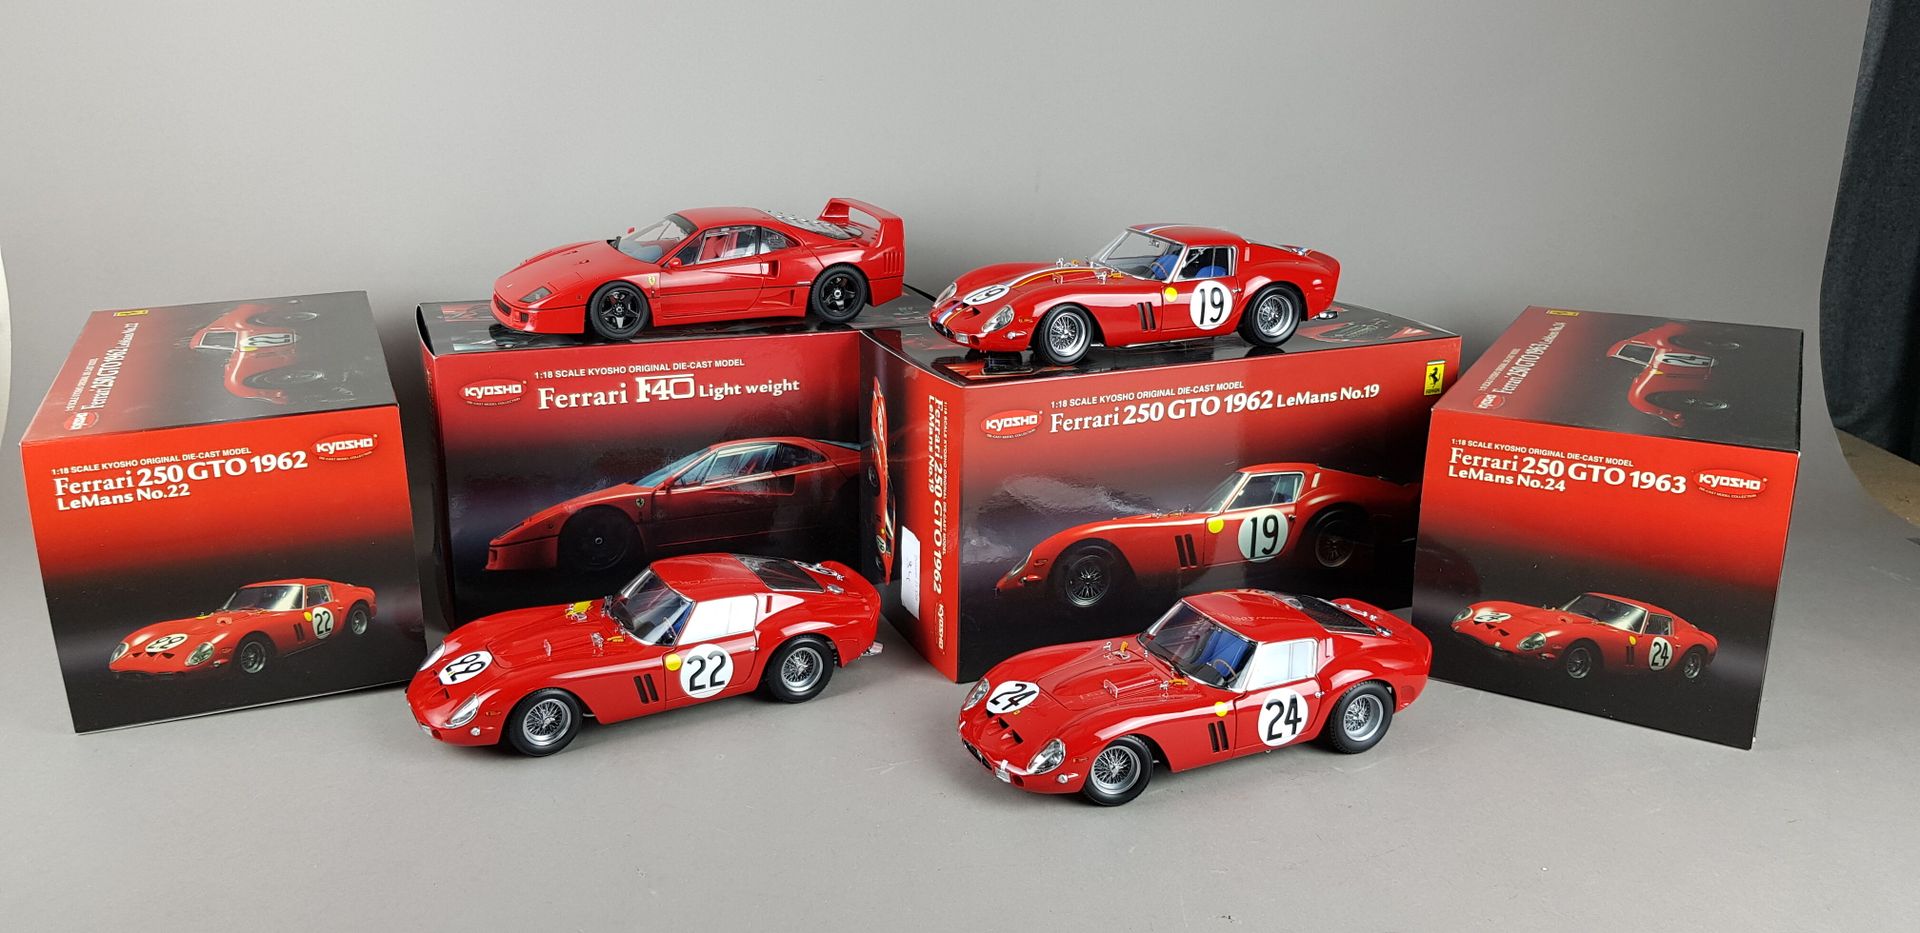 Null KYOSHO - FOUR Ferrari 1/18 scale:

1x F40 Light White

1x 250GTO 1962 Le Ma&hellip;